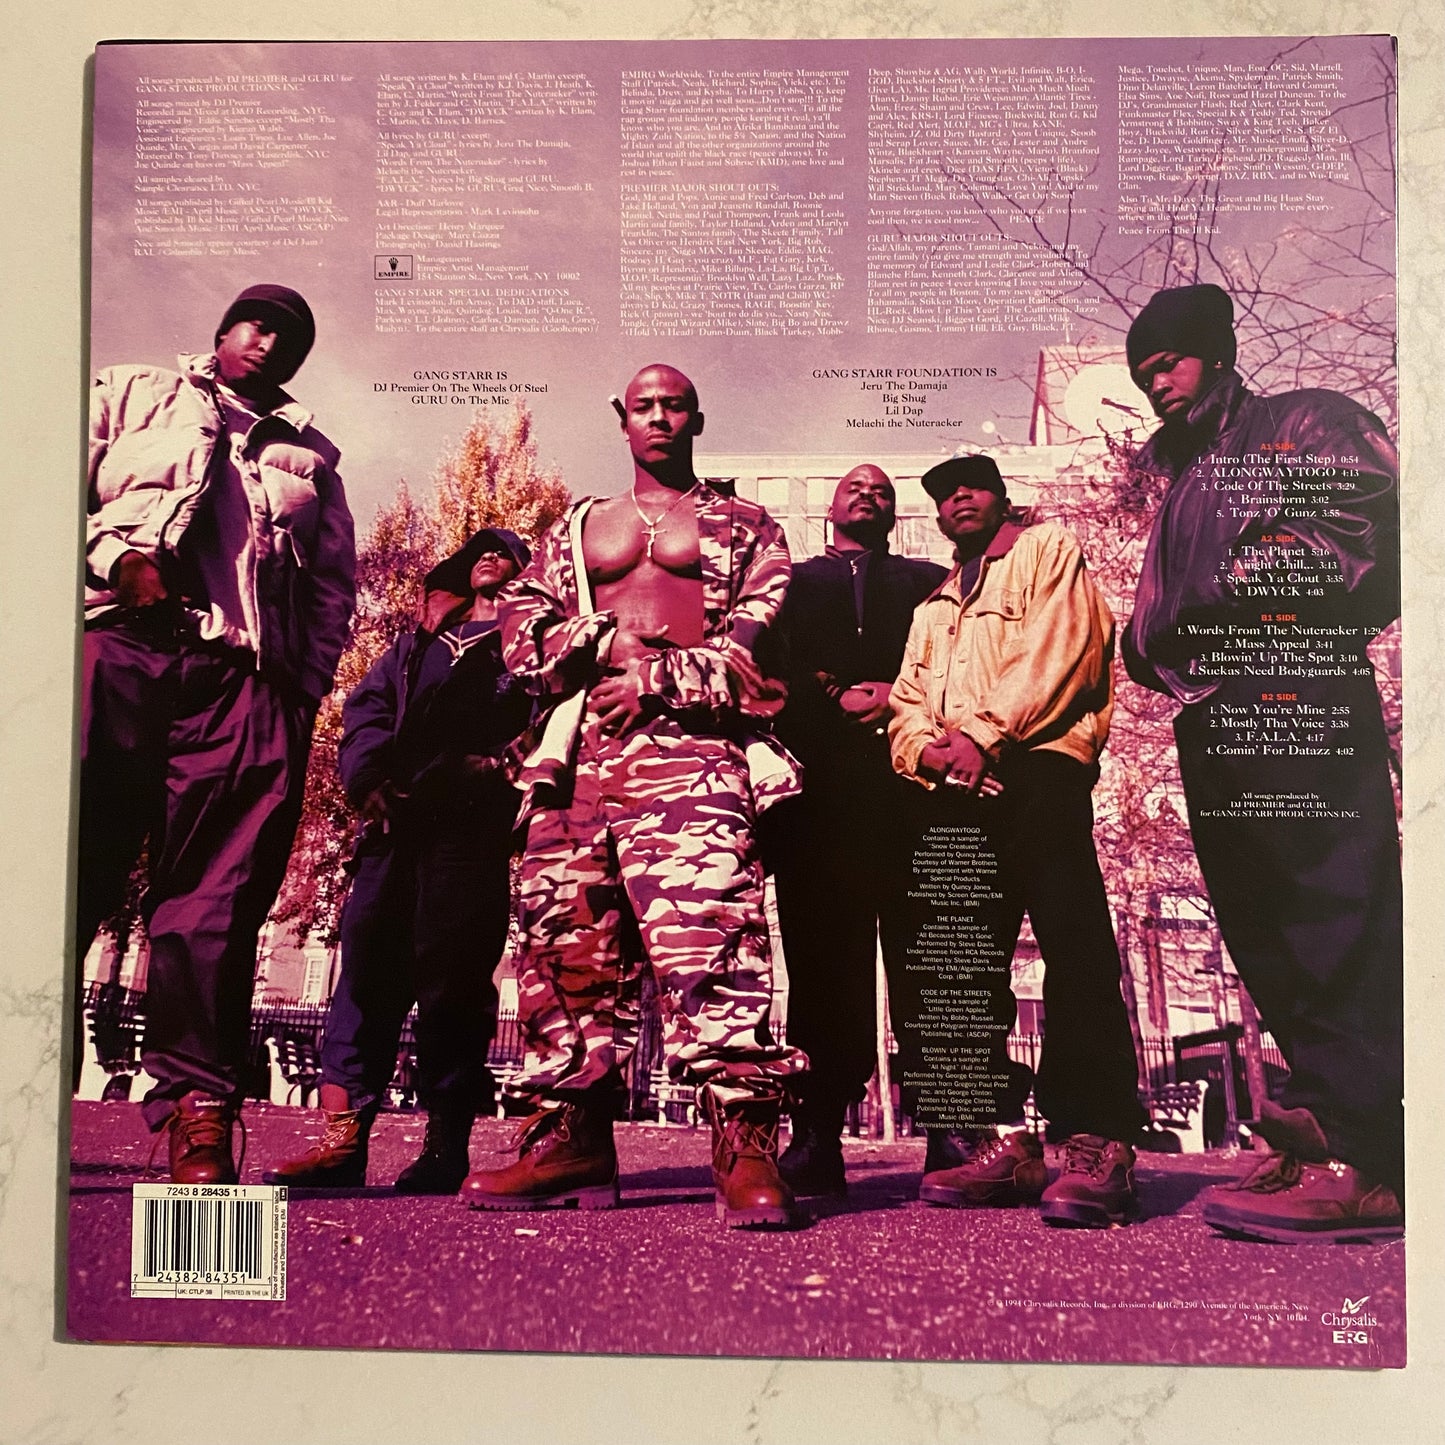 Gang Starr - Hard To Earn (2xLP, Album)